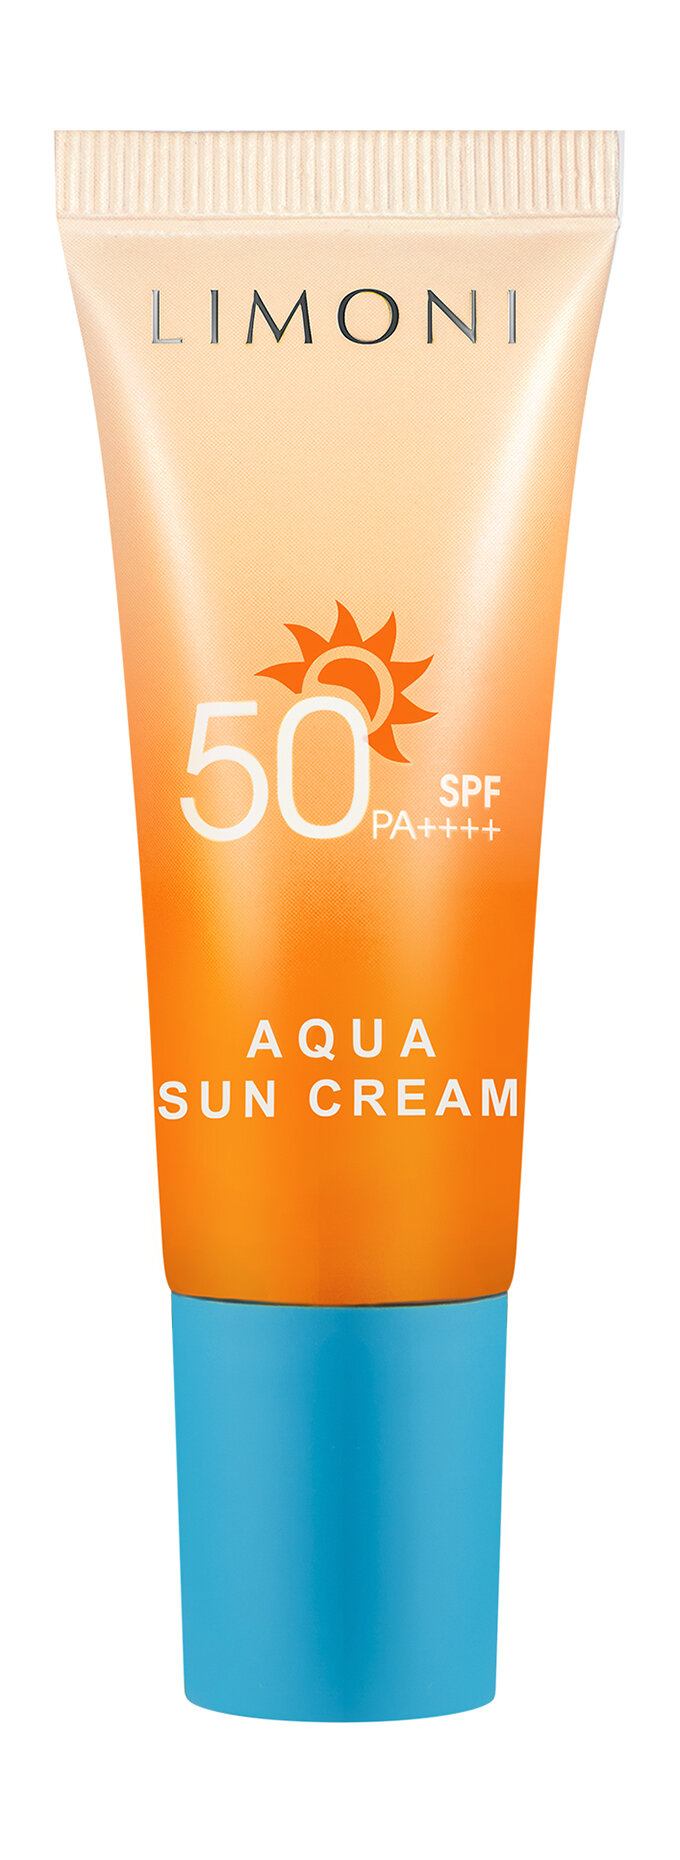 LIMONI Солнцезащитный крем Aqua Sun Cream SPF 50+РА++++, 25 мл